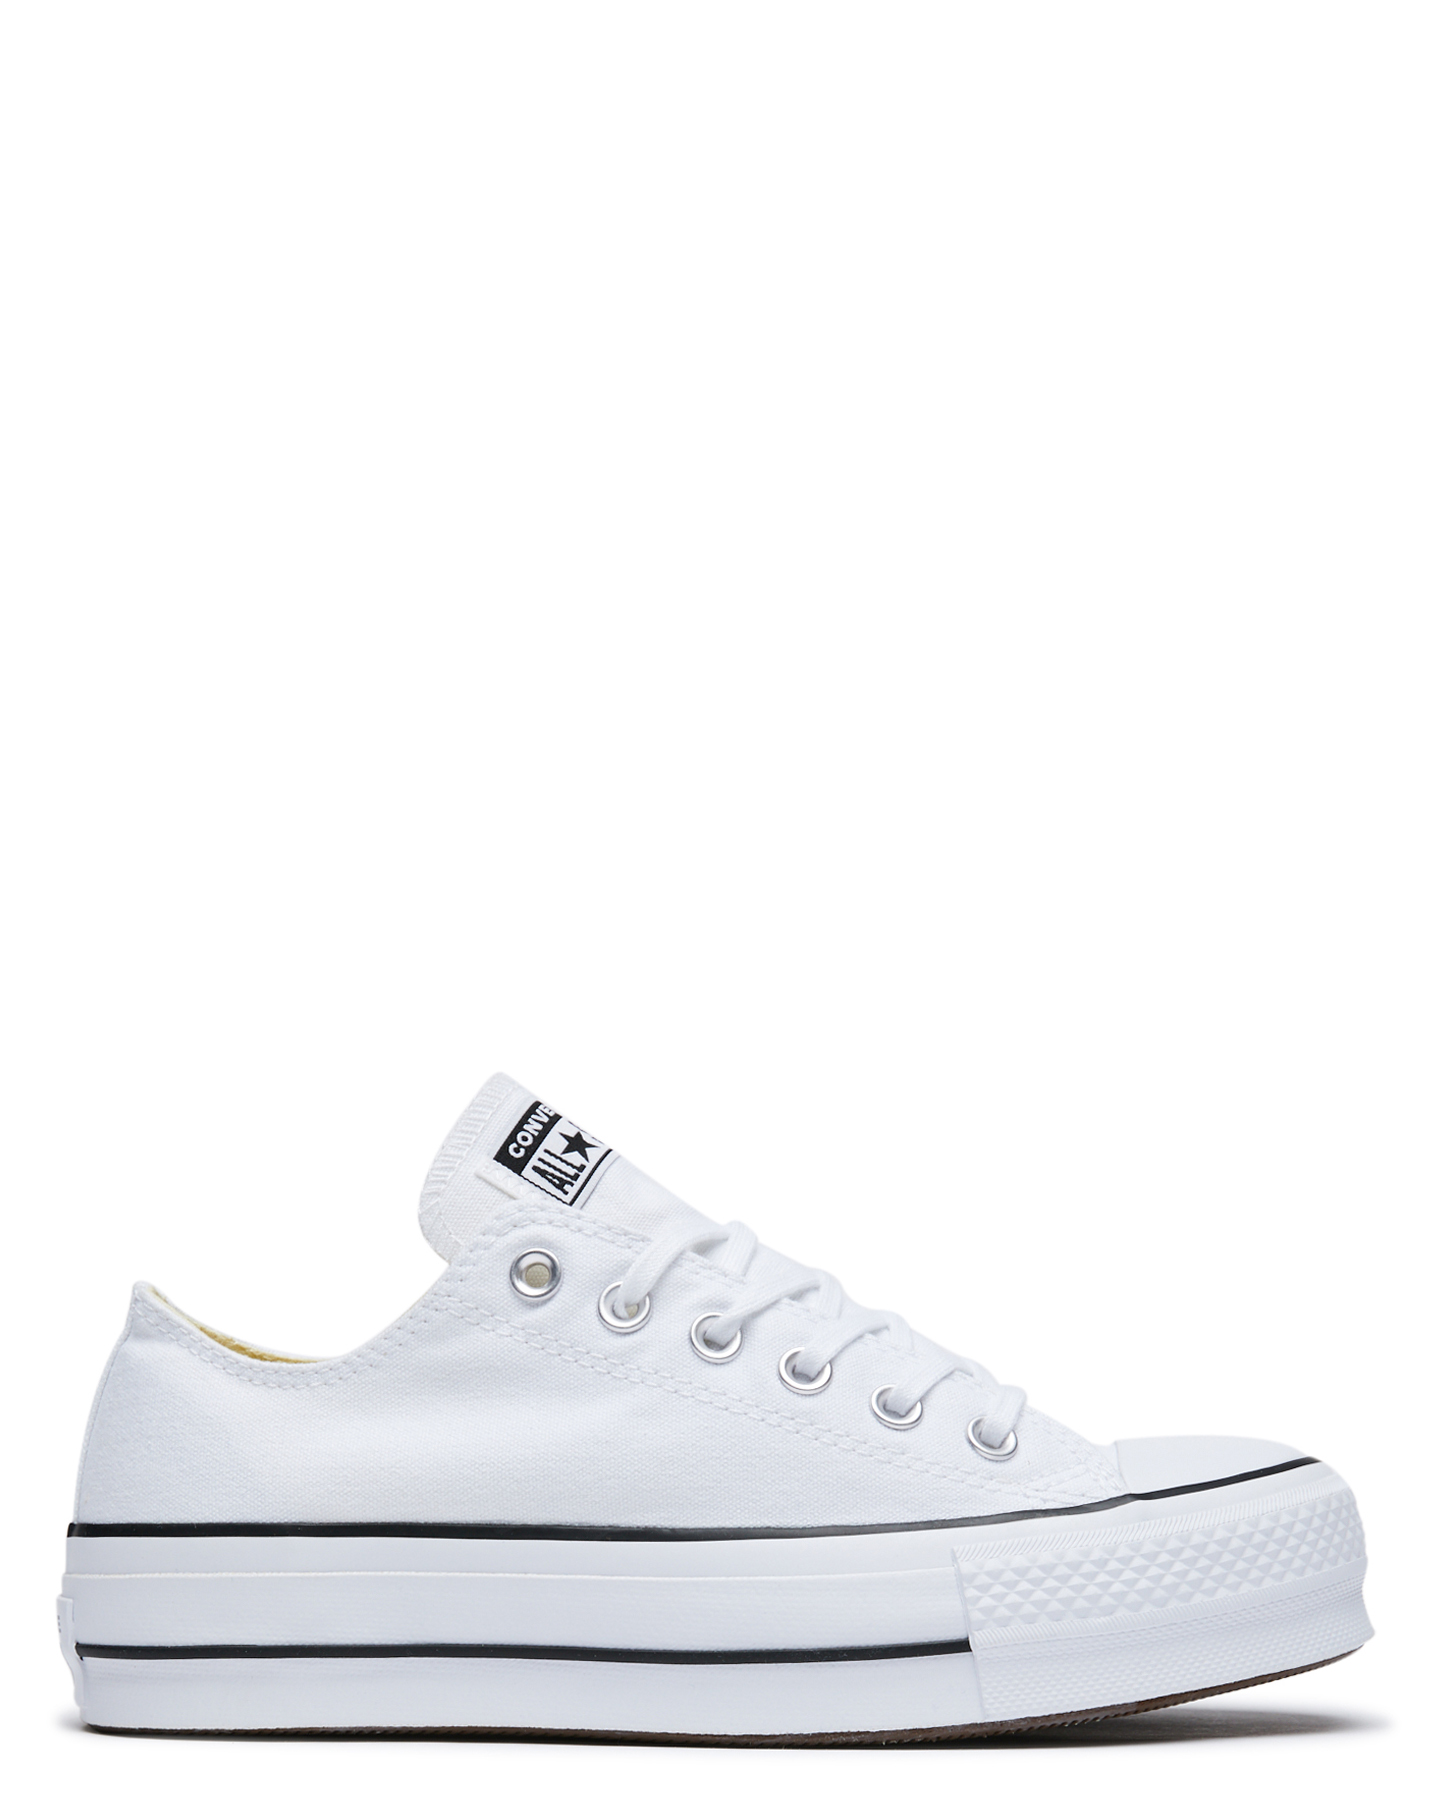 converse platform white sneakers